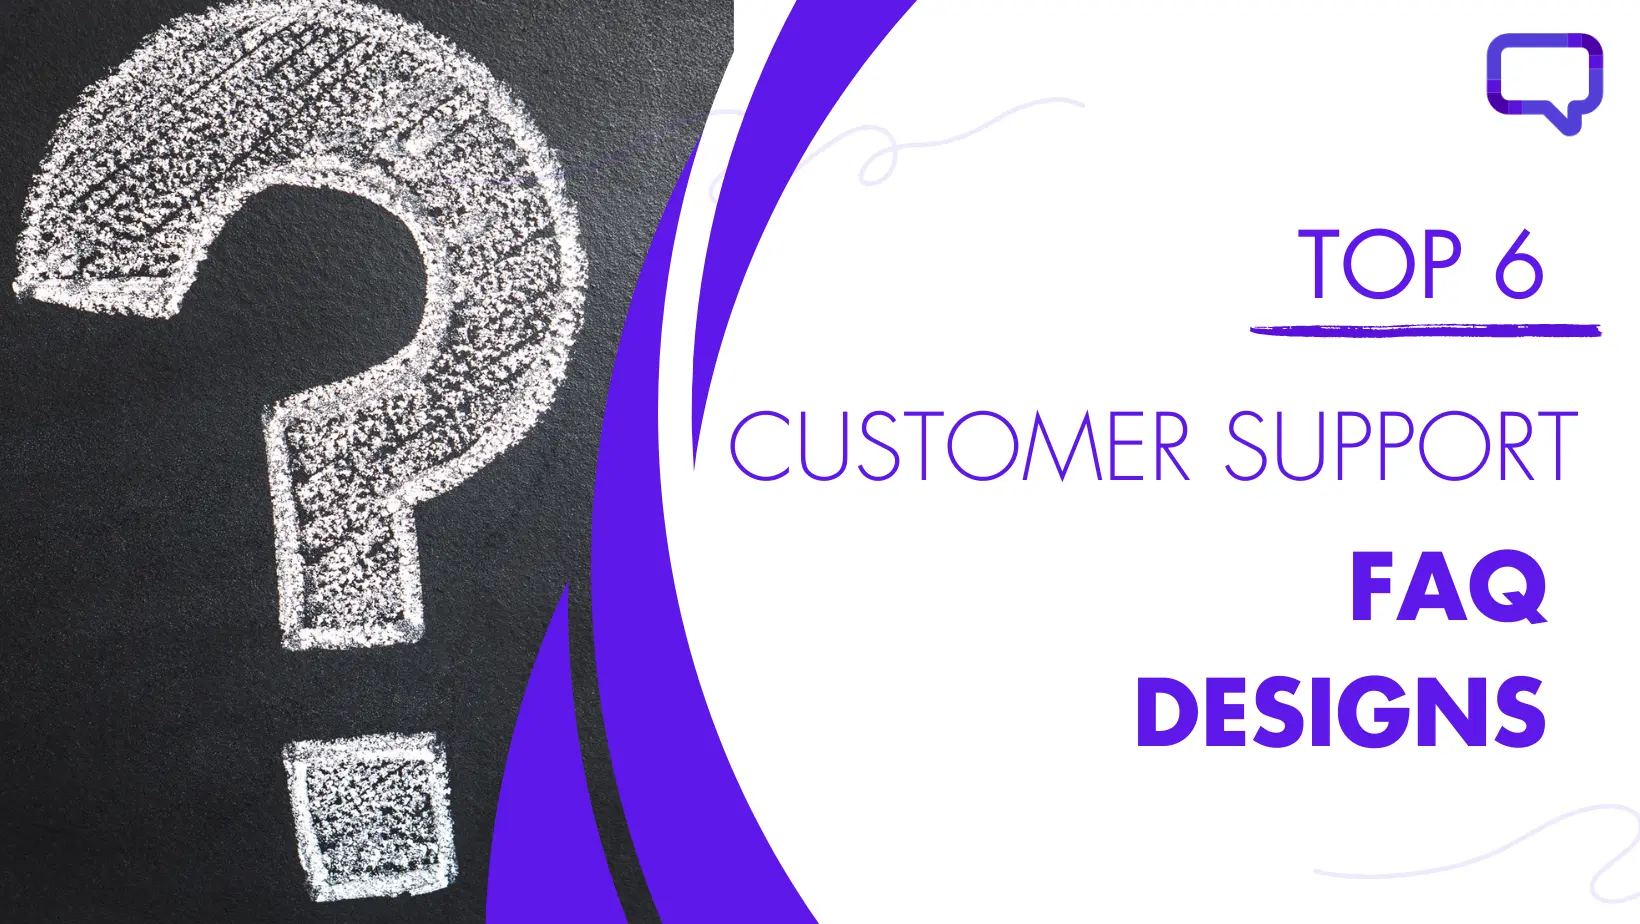 Top 6 Customer Support FAQ Designs that Improves Revenue